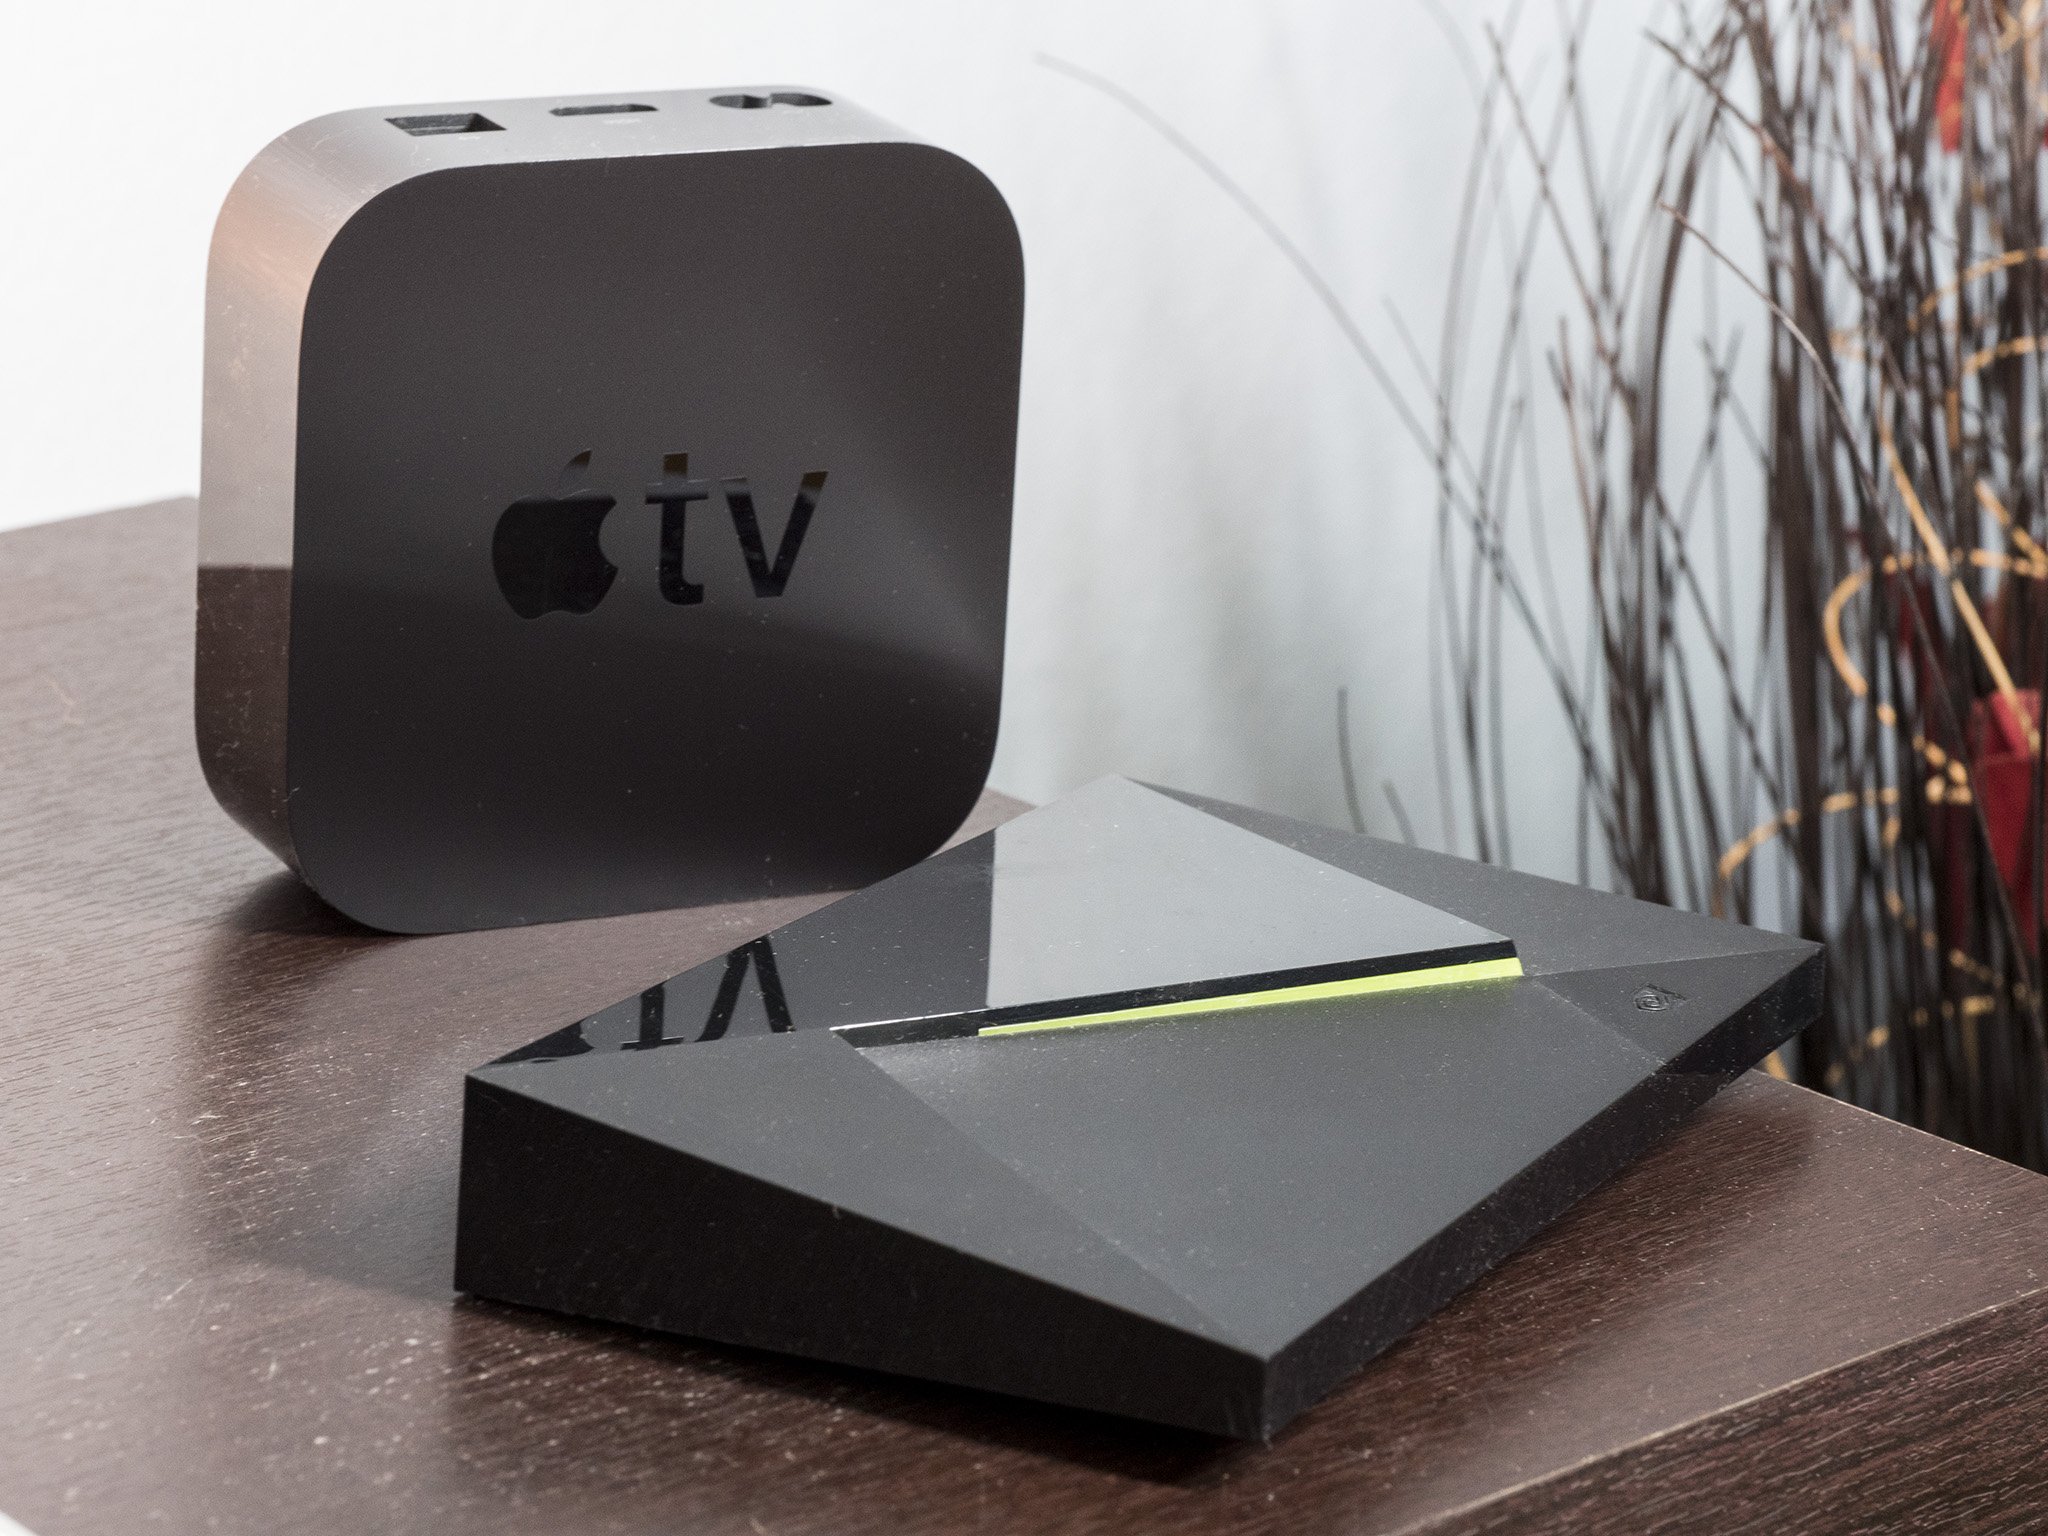 Apple TV and Nvidia Shield